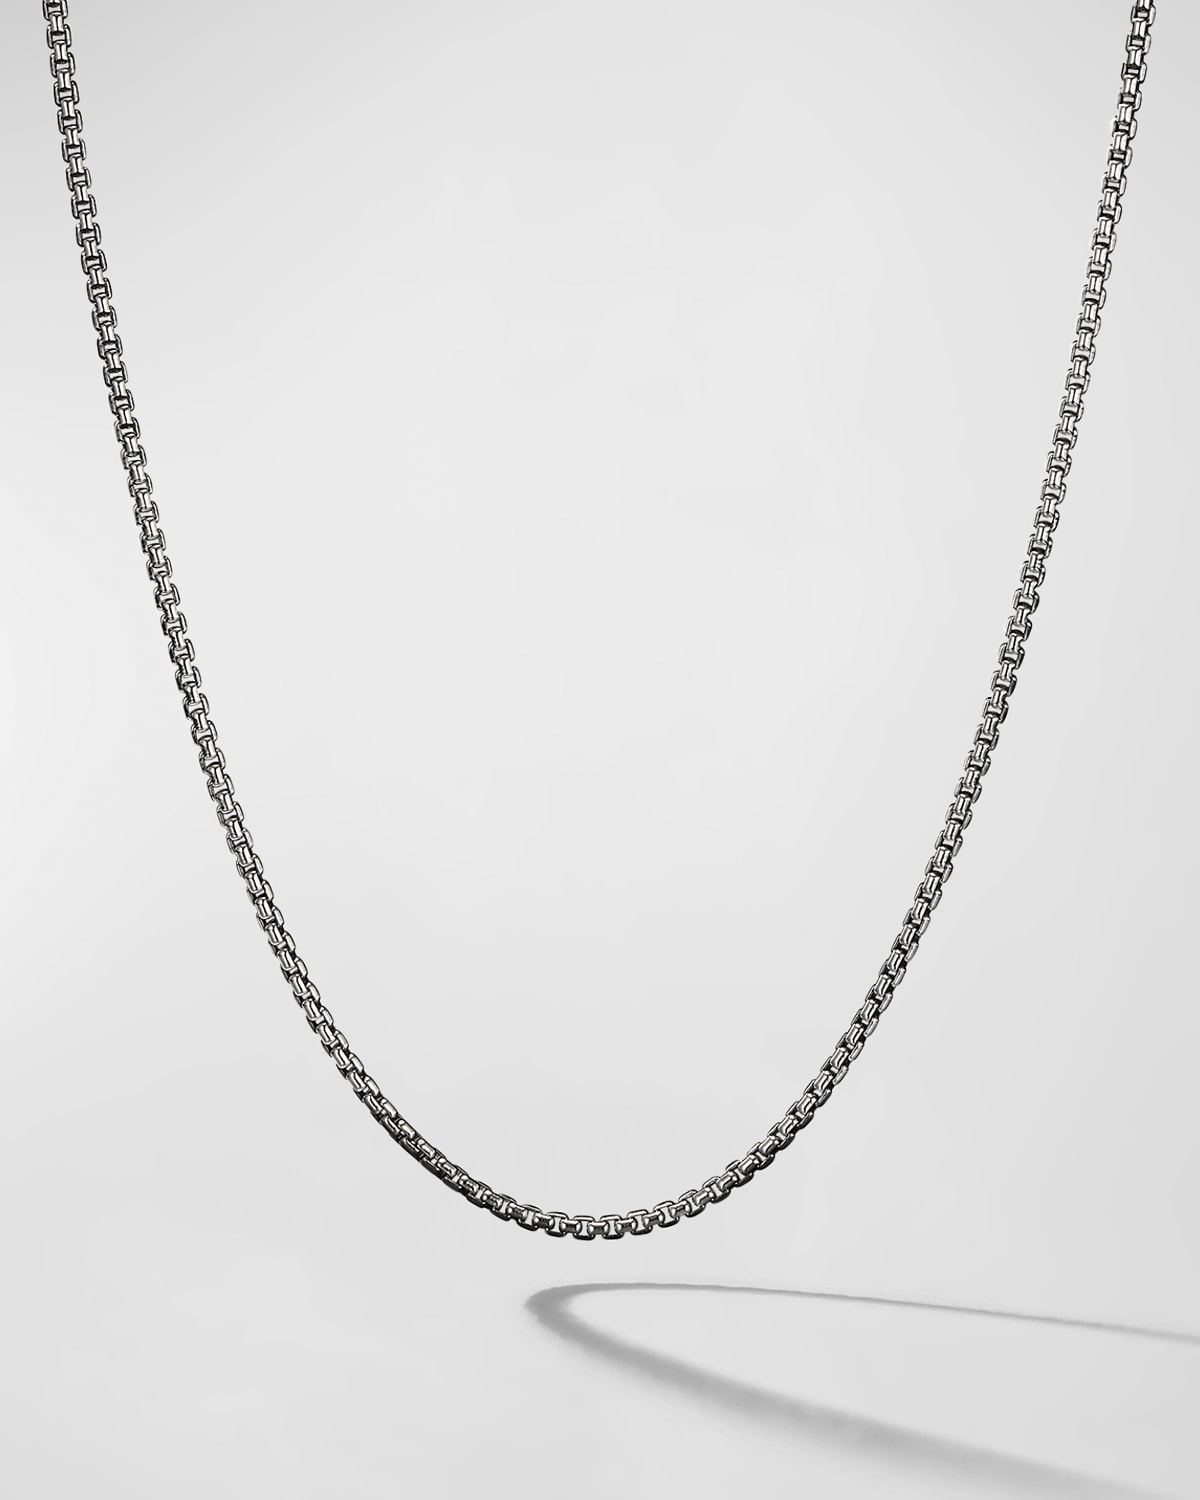 Men's Box Chain Necklace in Silver, 1.7mm, 24"L